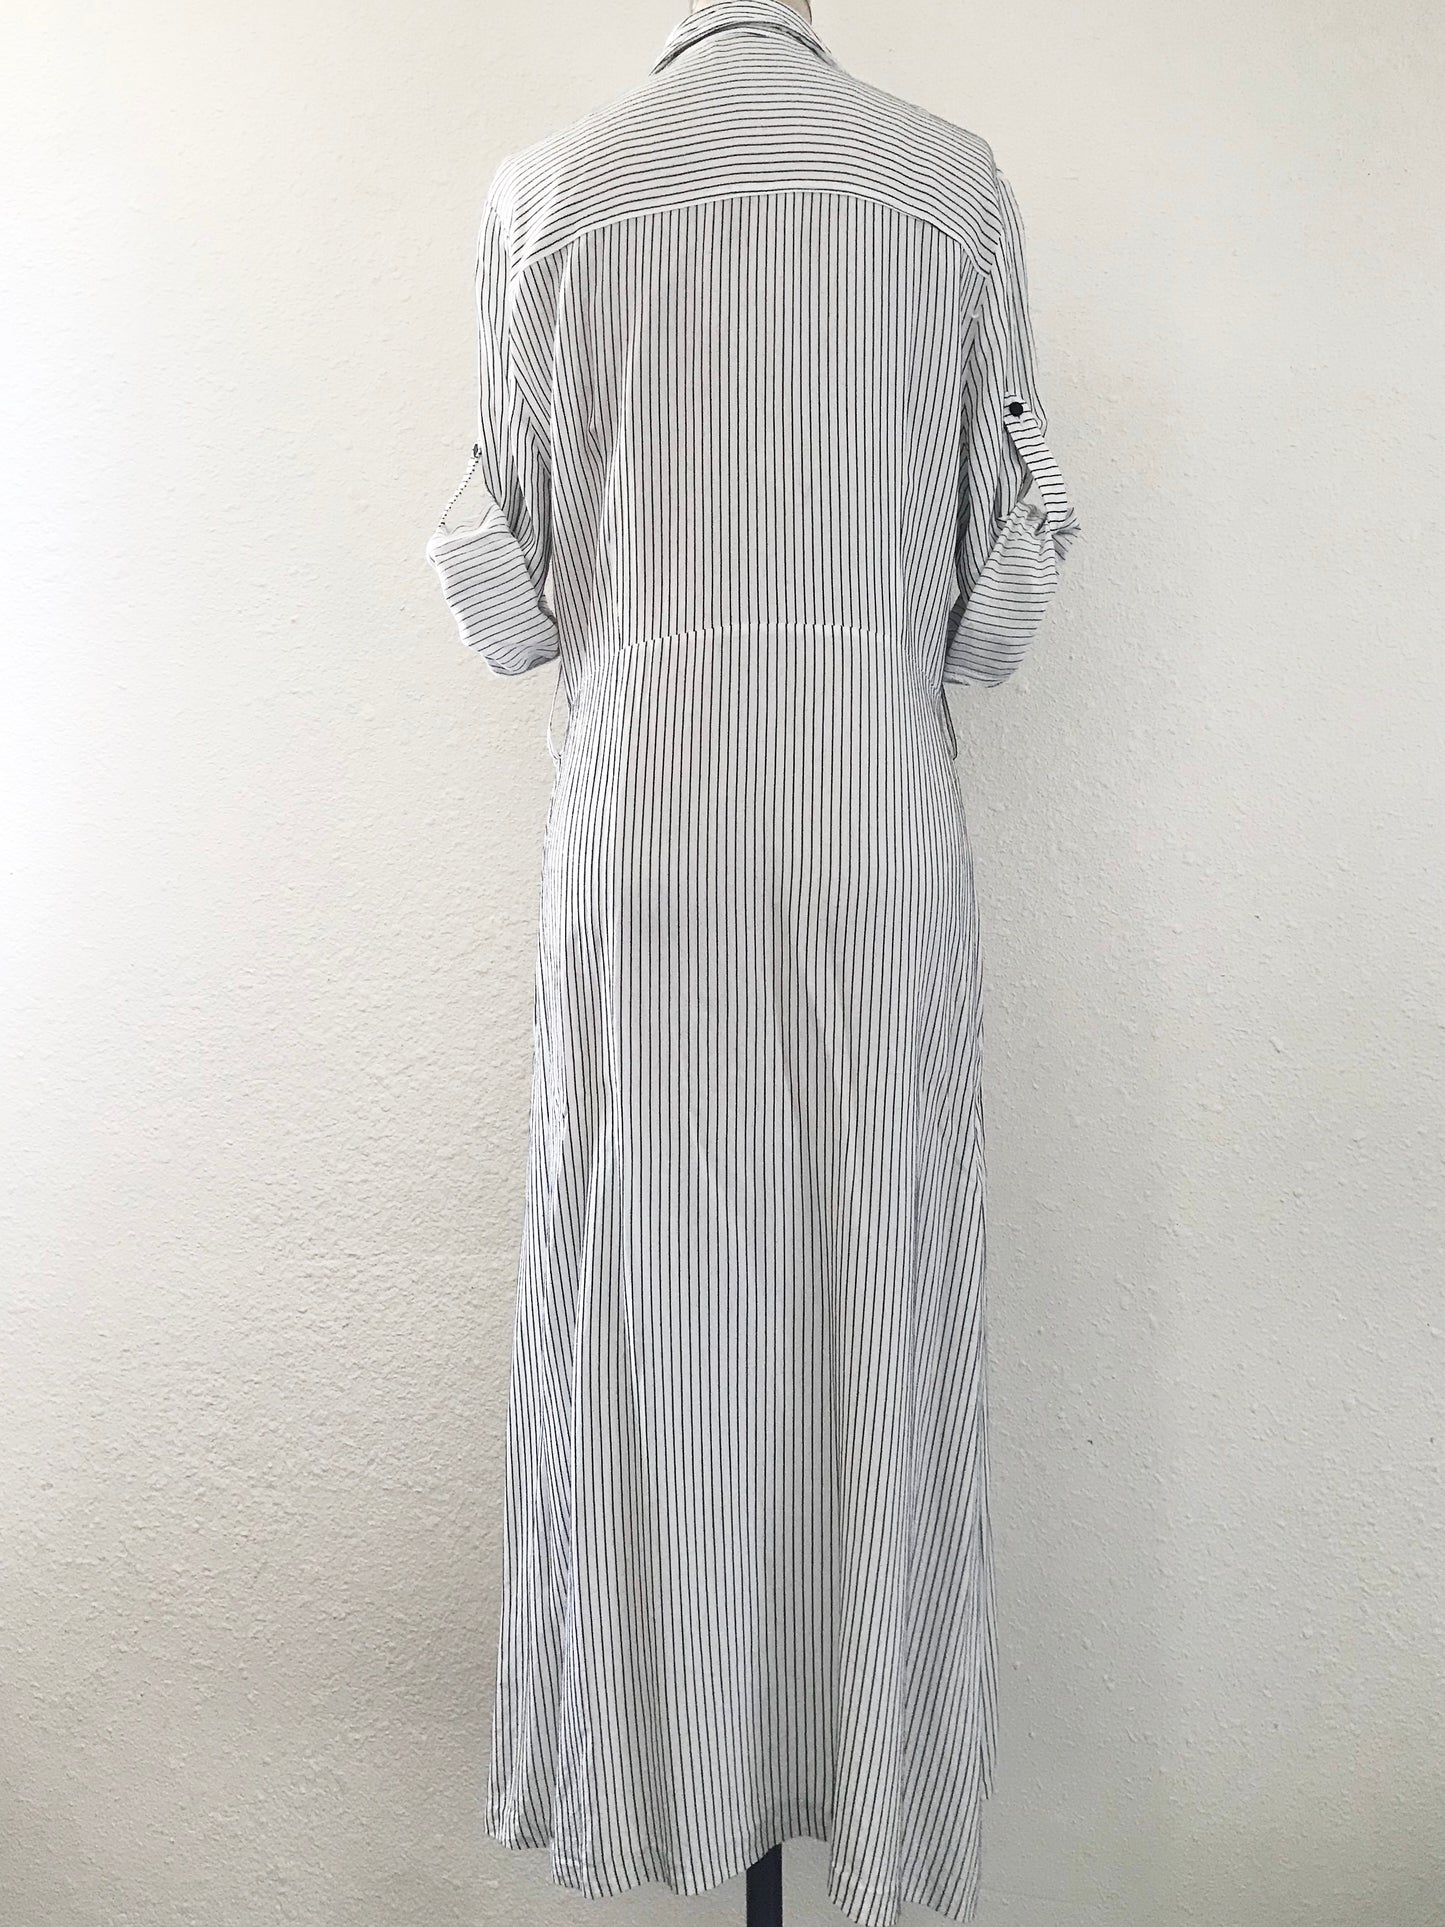 Prelovely | Zara White Pinstriped Long Tunic Shirt Dress